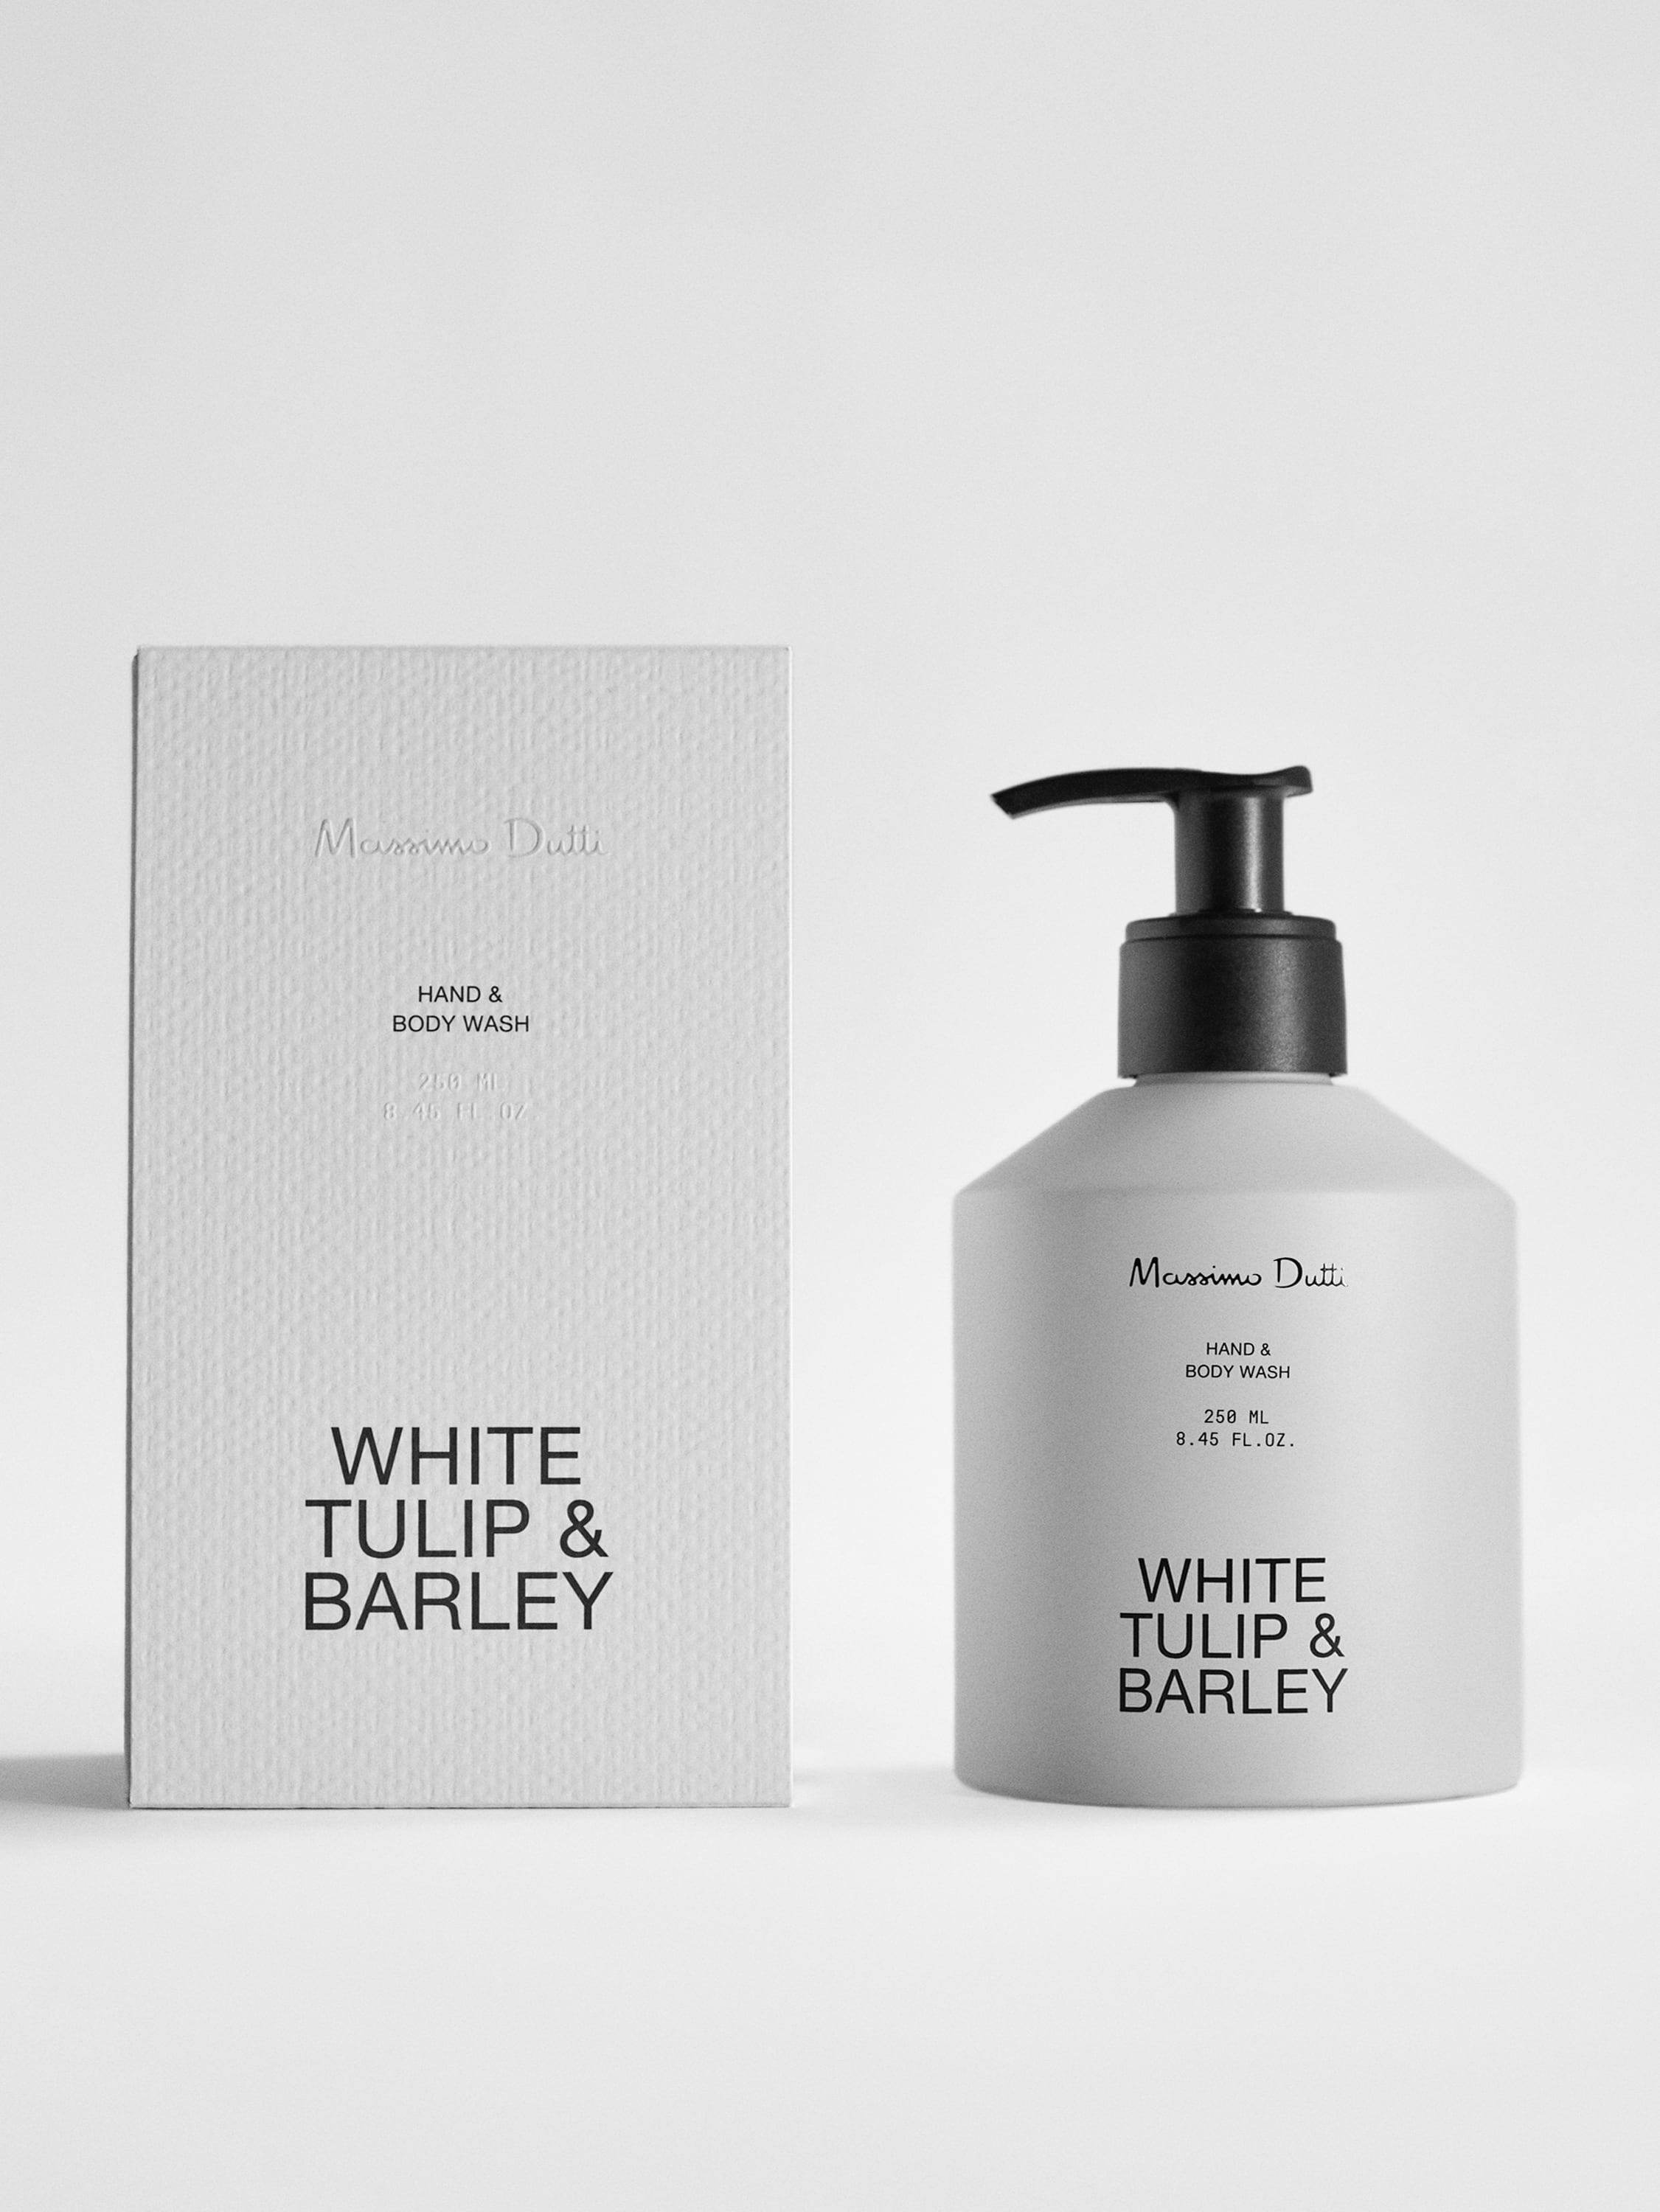 (250 ml) White Tulip & Barley liquid hand soap and body wash